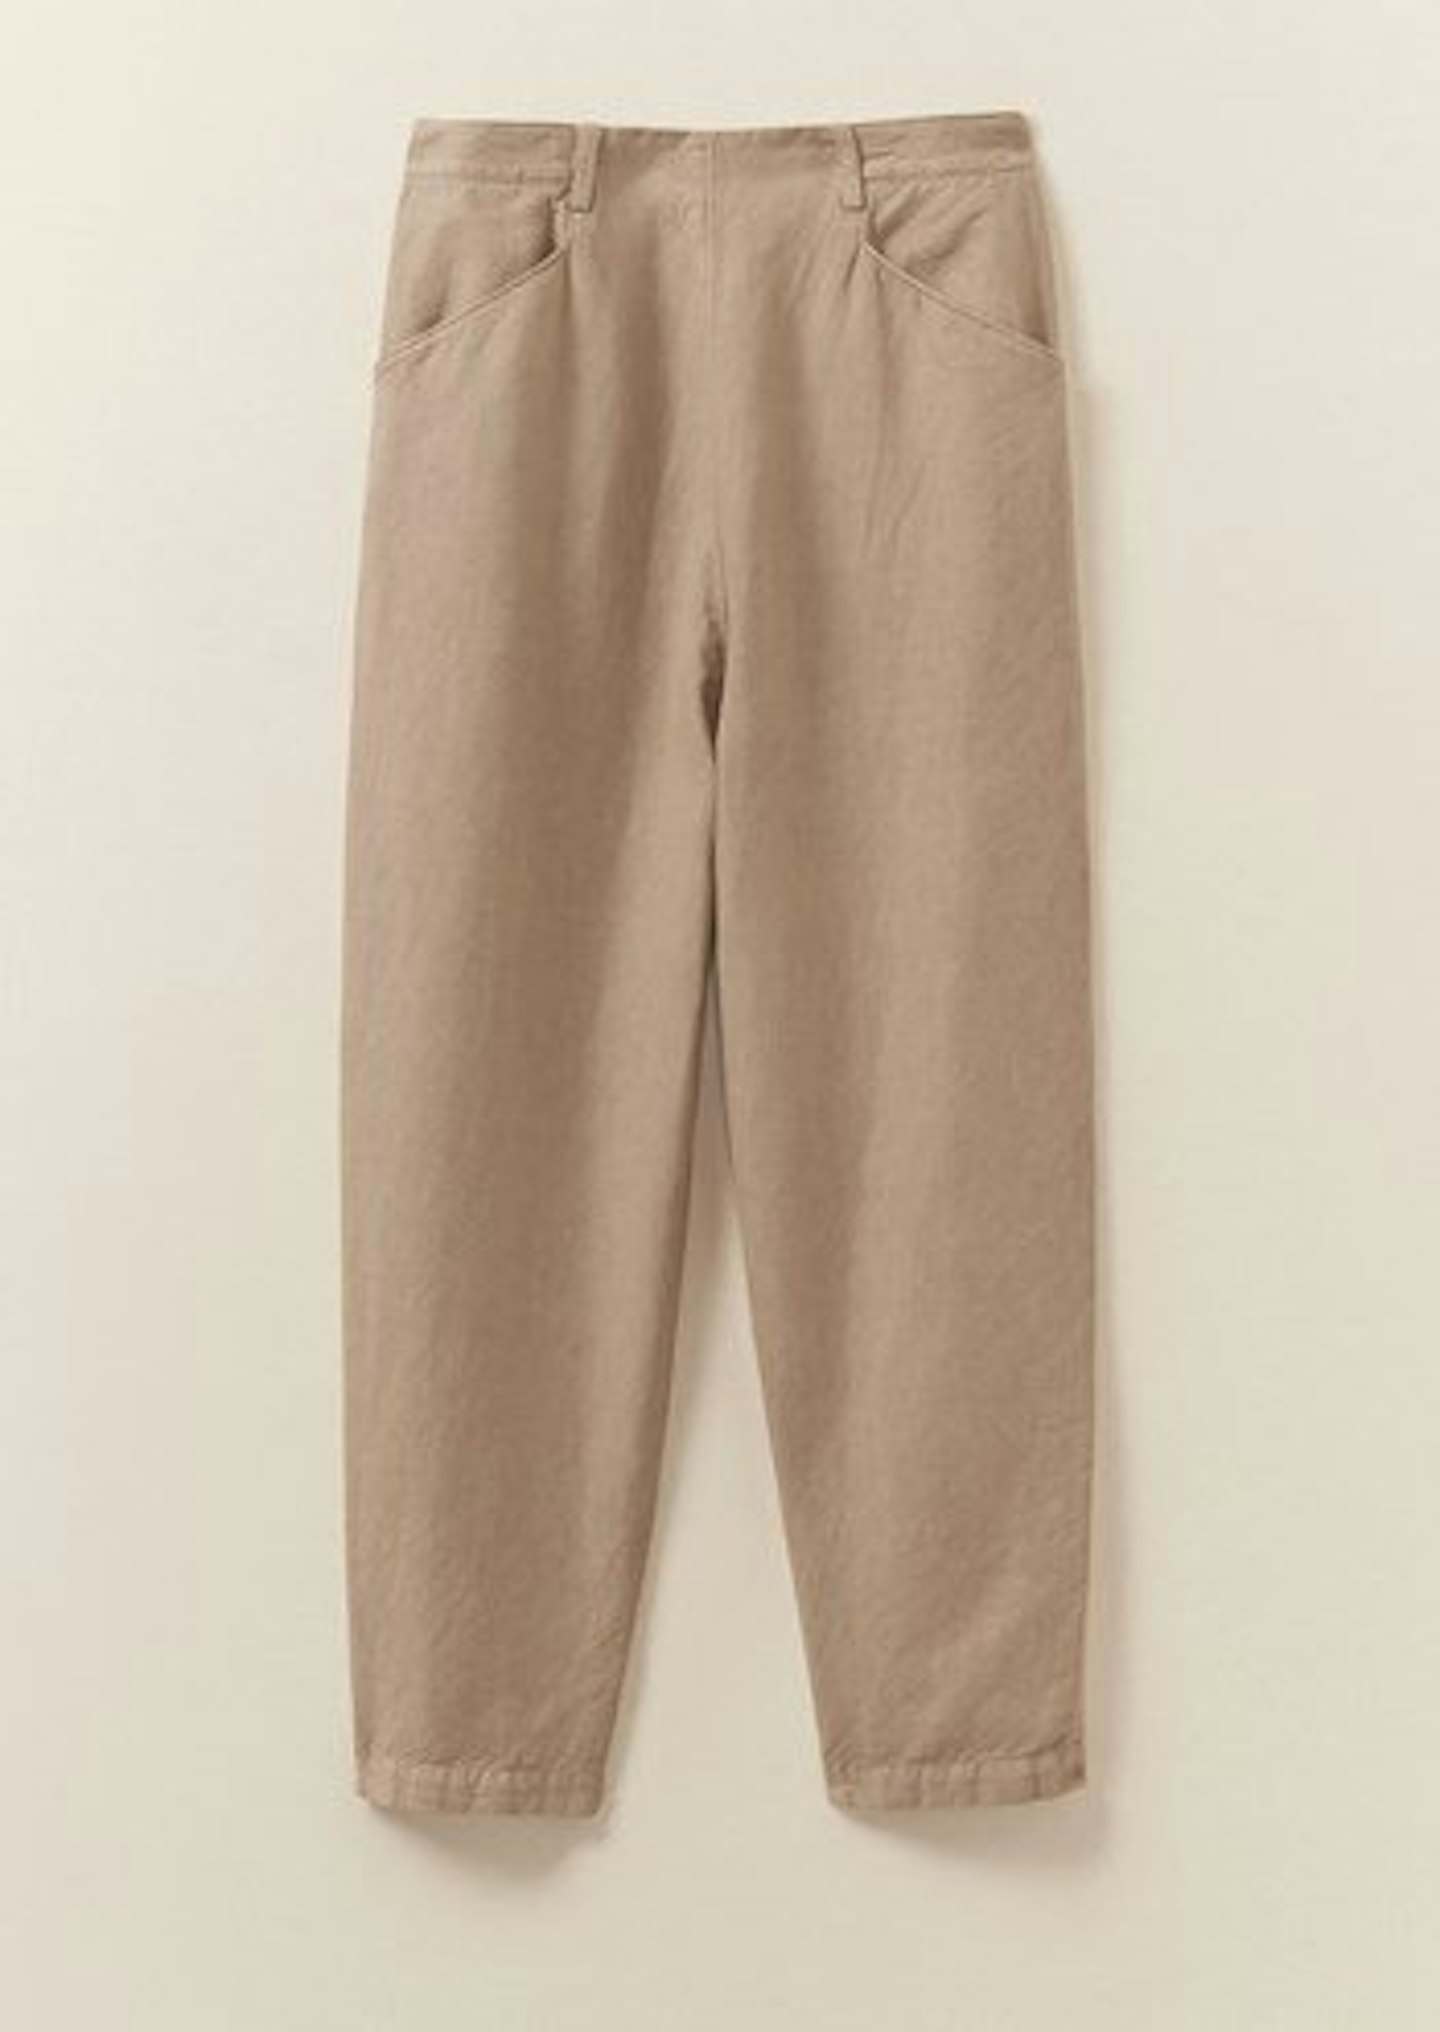 TOAST, Alix Trousers, £155